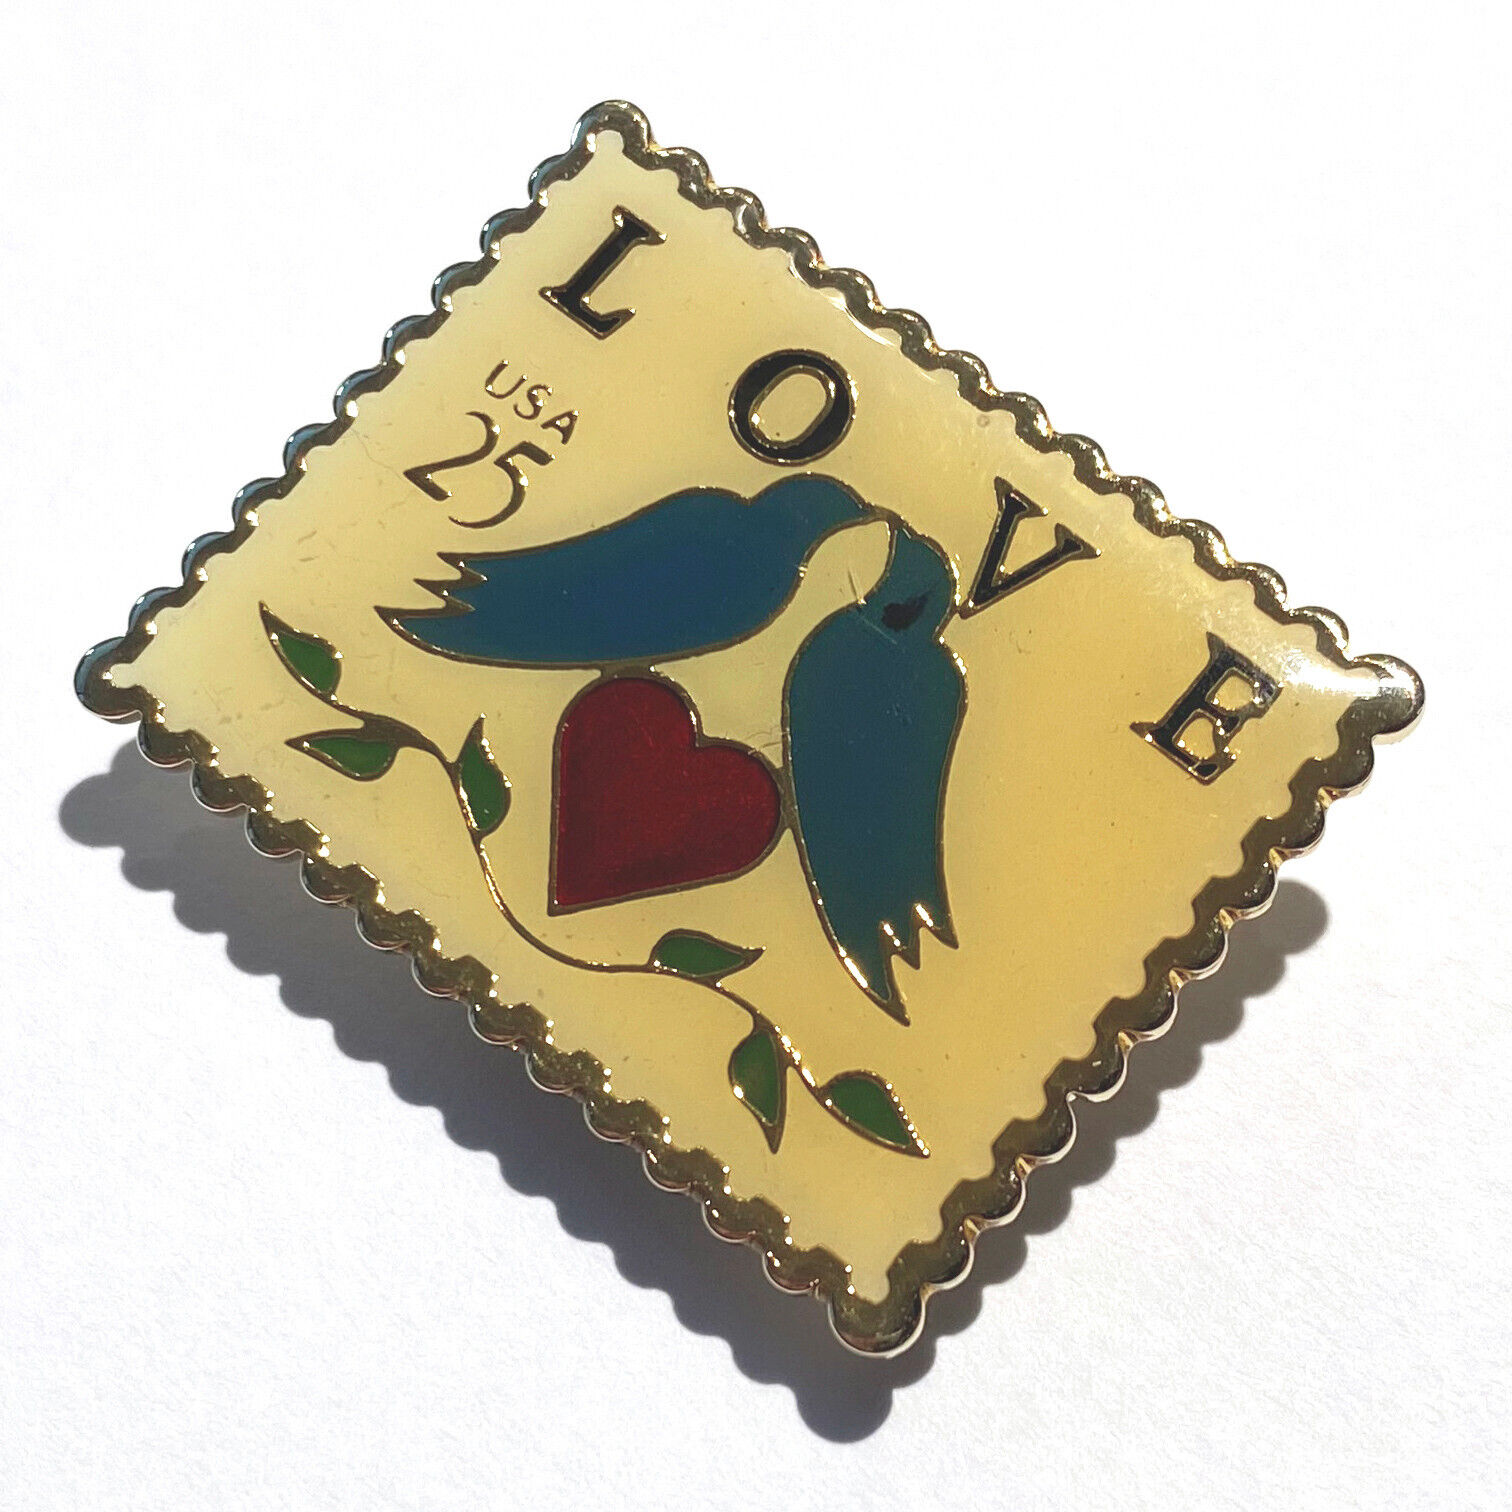 USPS Vintage 80s Love Series (Love Birds) 25c Stamp Collectible Enamel Pin